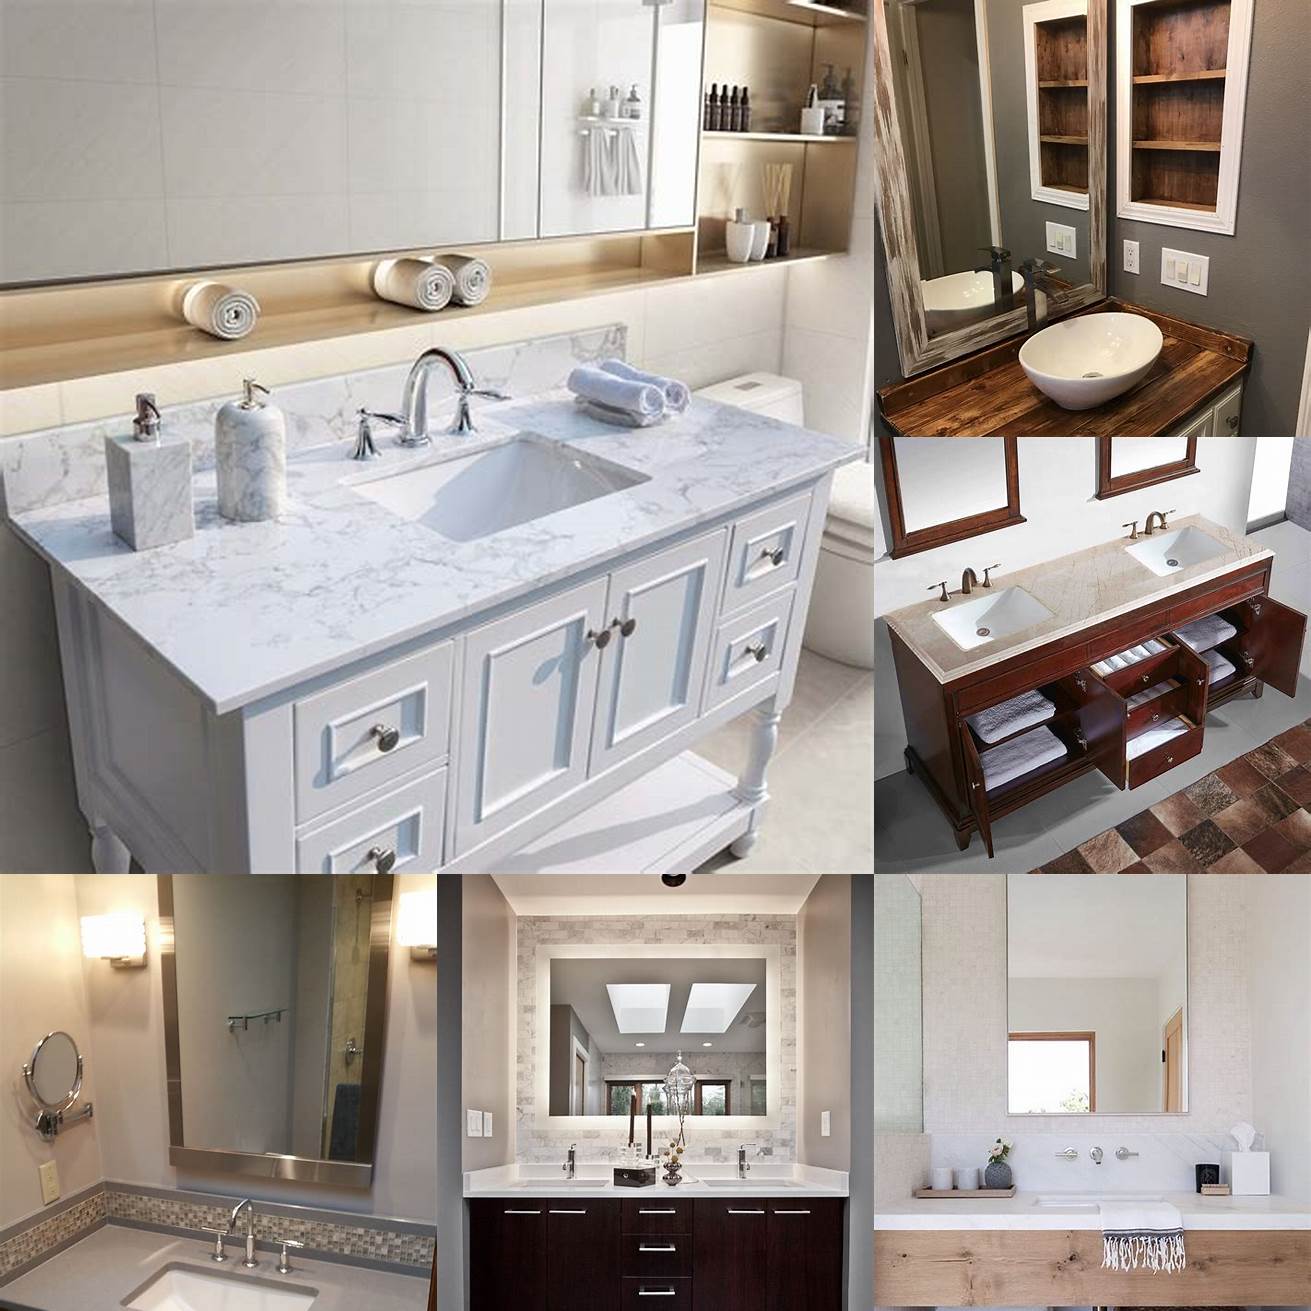 Image of a wood bathroom vanity top with a marble backsplash